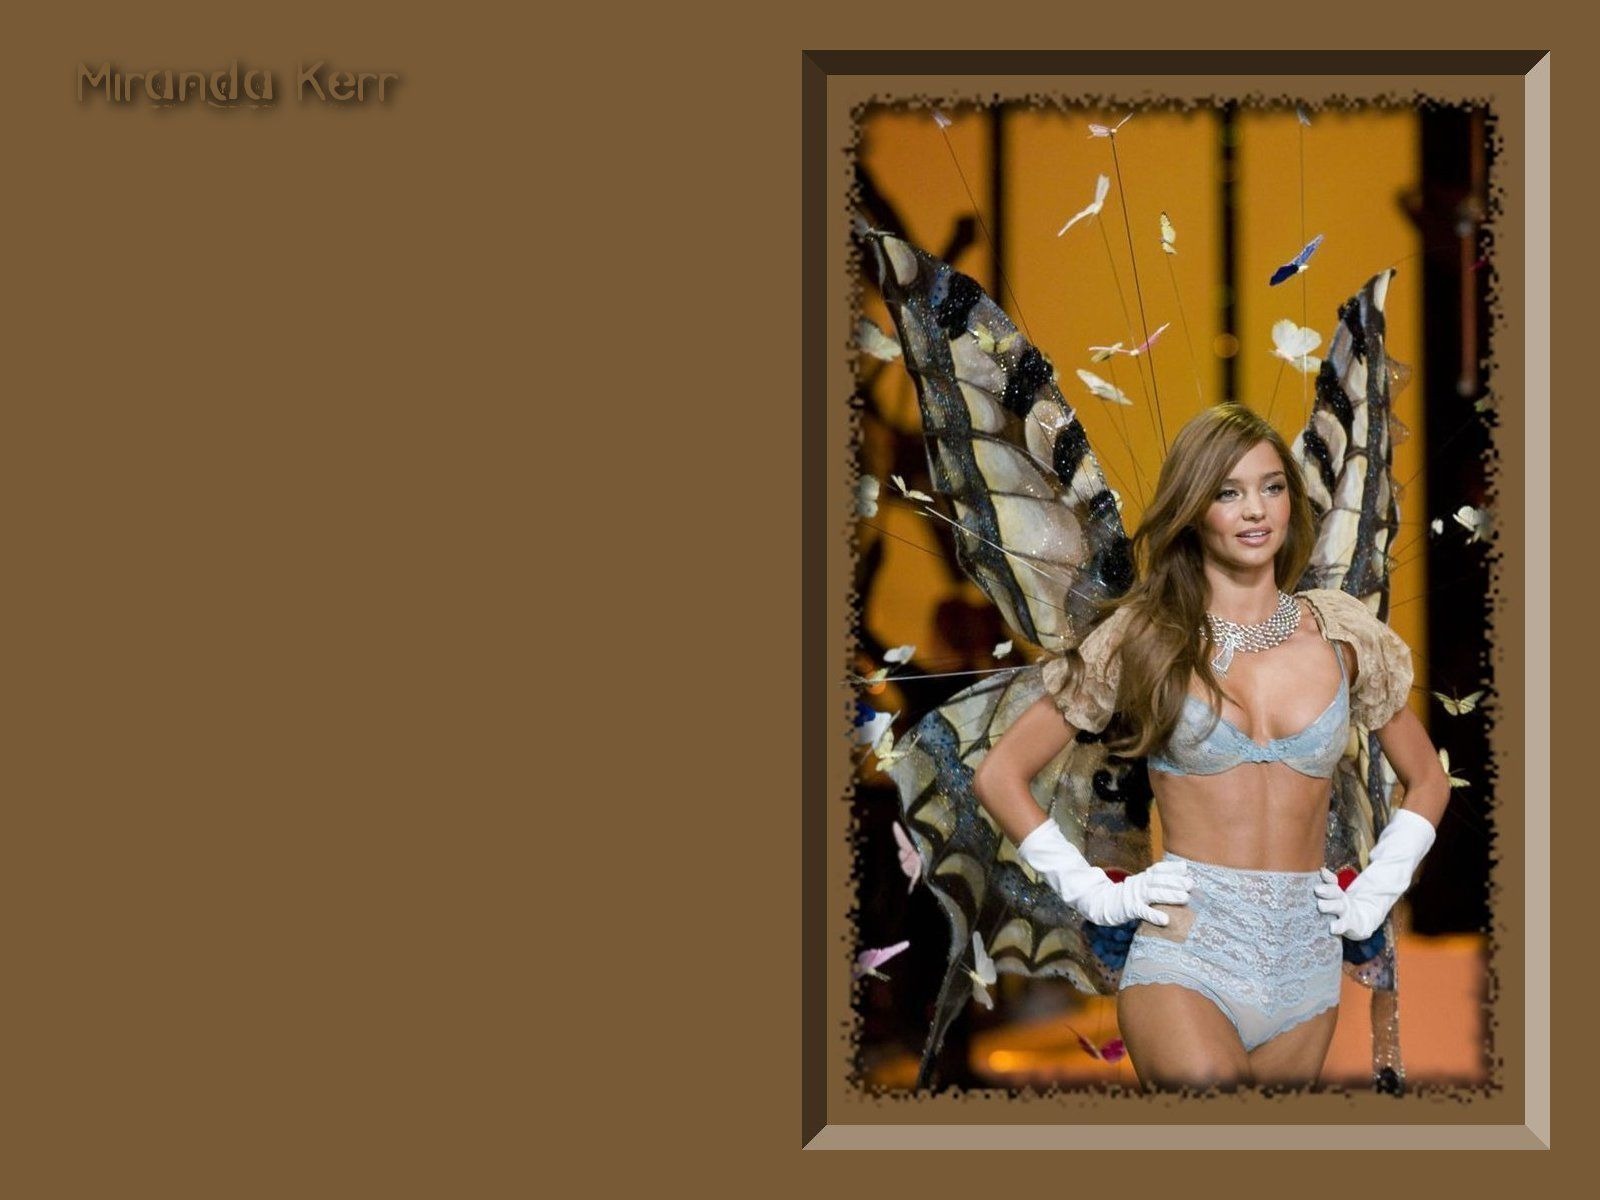 Miranda Kerr #012 - 1600x1200 Wallpapers Pictures Photos Images